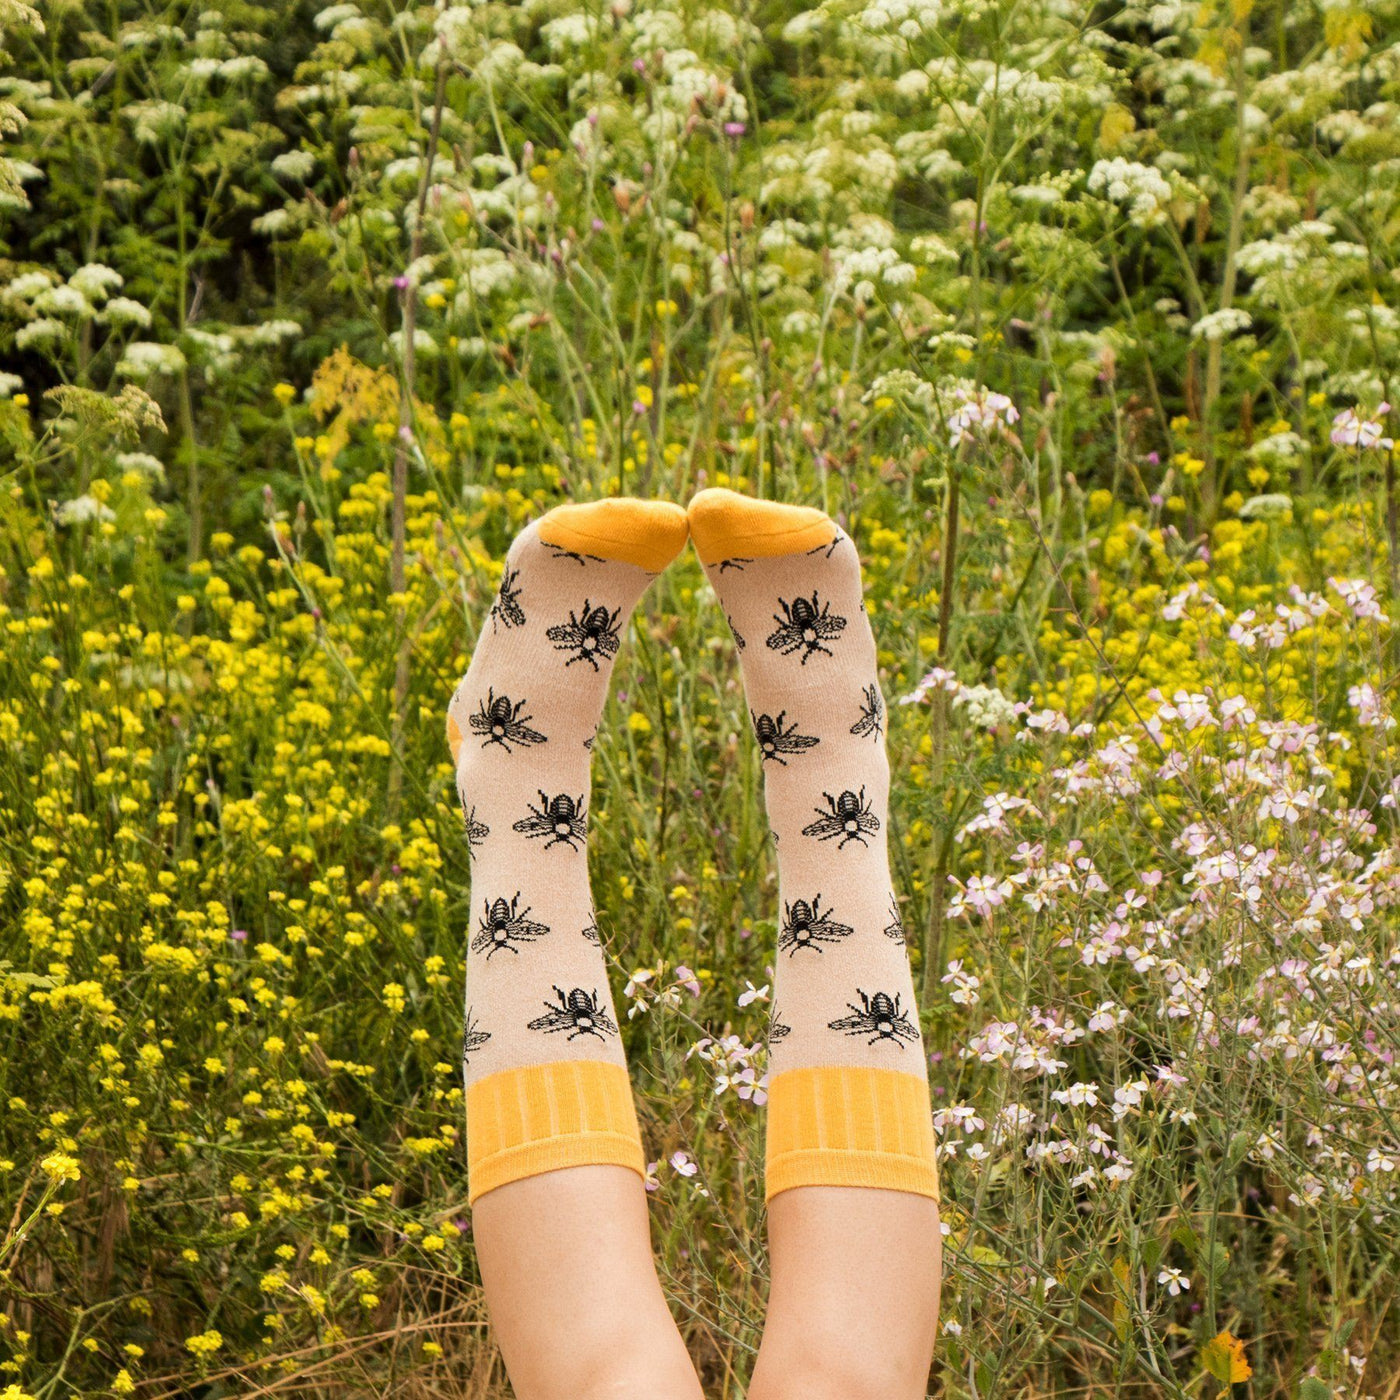 Socksmith - Outlands Bee Boot Socks | Women's - Knock Your Socks Off